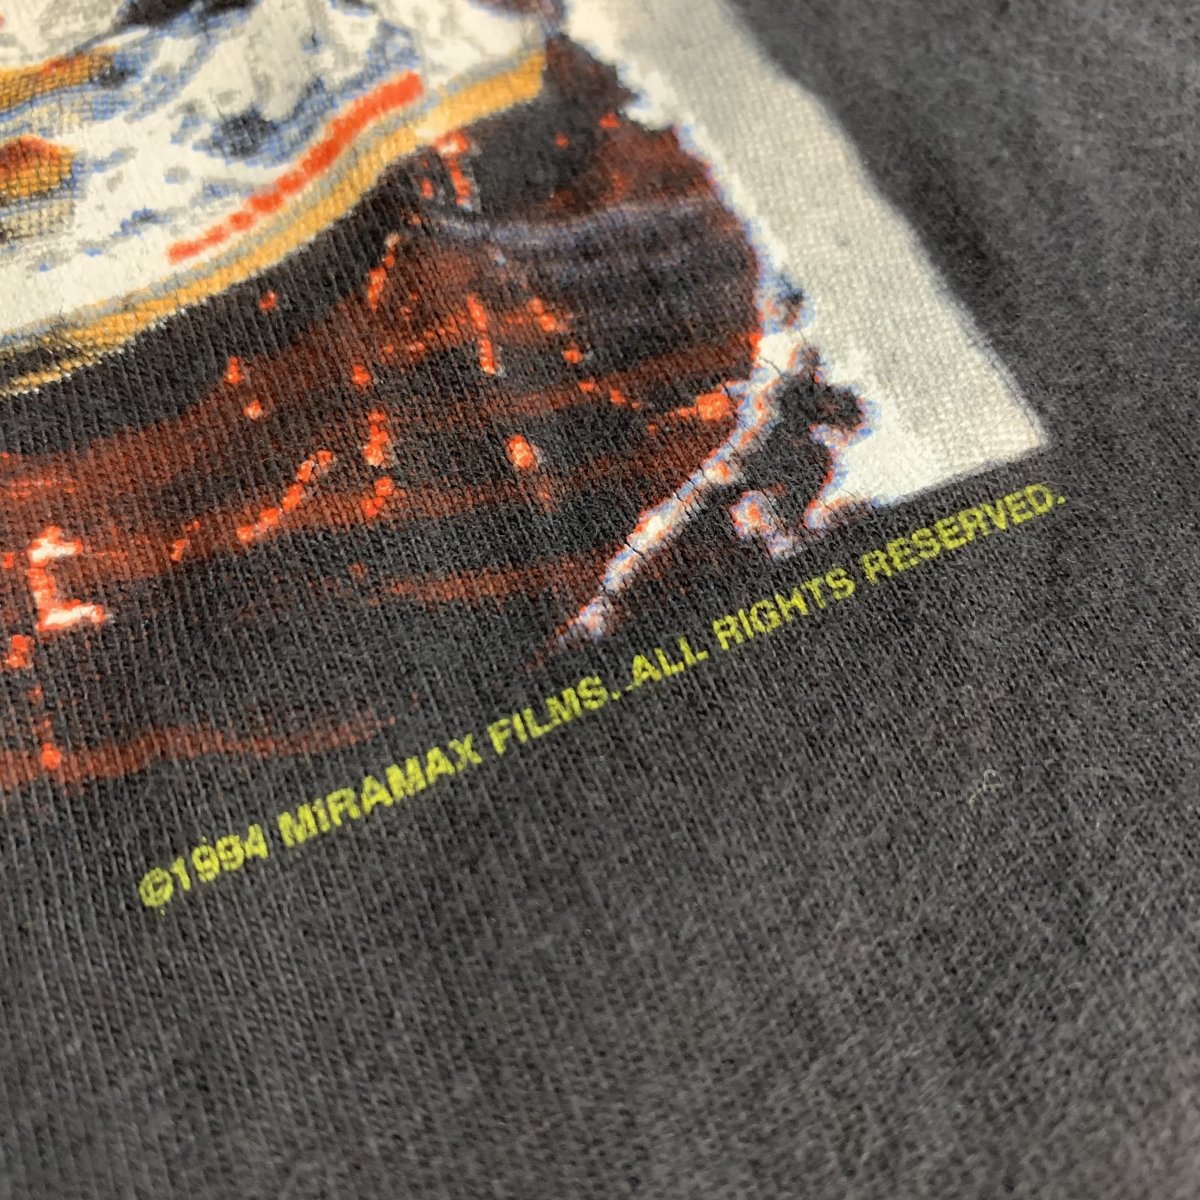 USA製 94年 PULP FICTION Print S/S Tee 黒 L 90s パルプフィクション 半袖 Tシャツ タランティーノ  ユマサーマン プリント 映画 ムービーT 1994 古着 - NEWJOKE ONLINE STORE